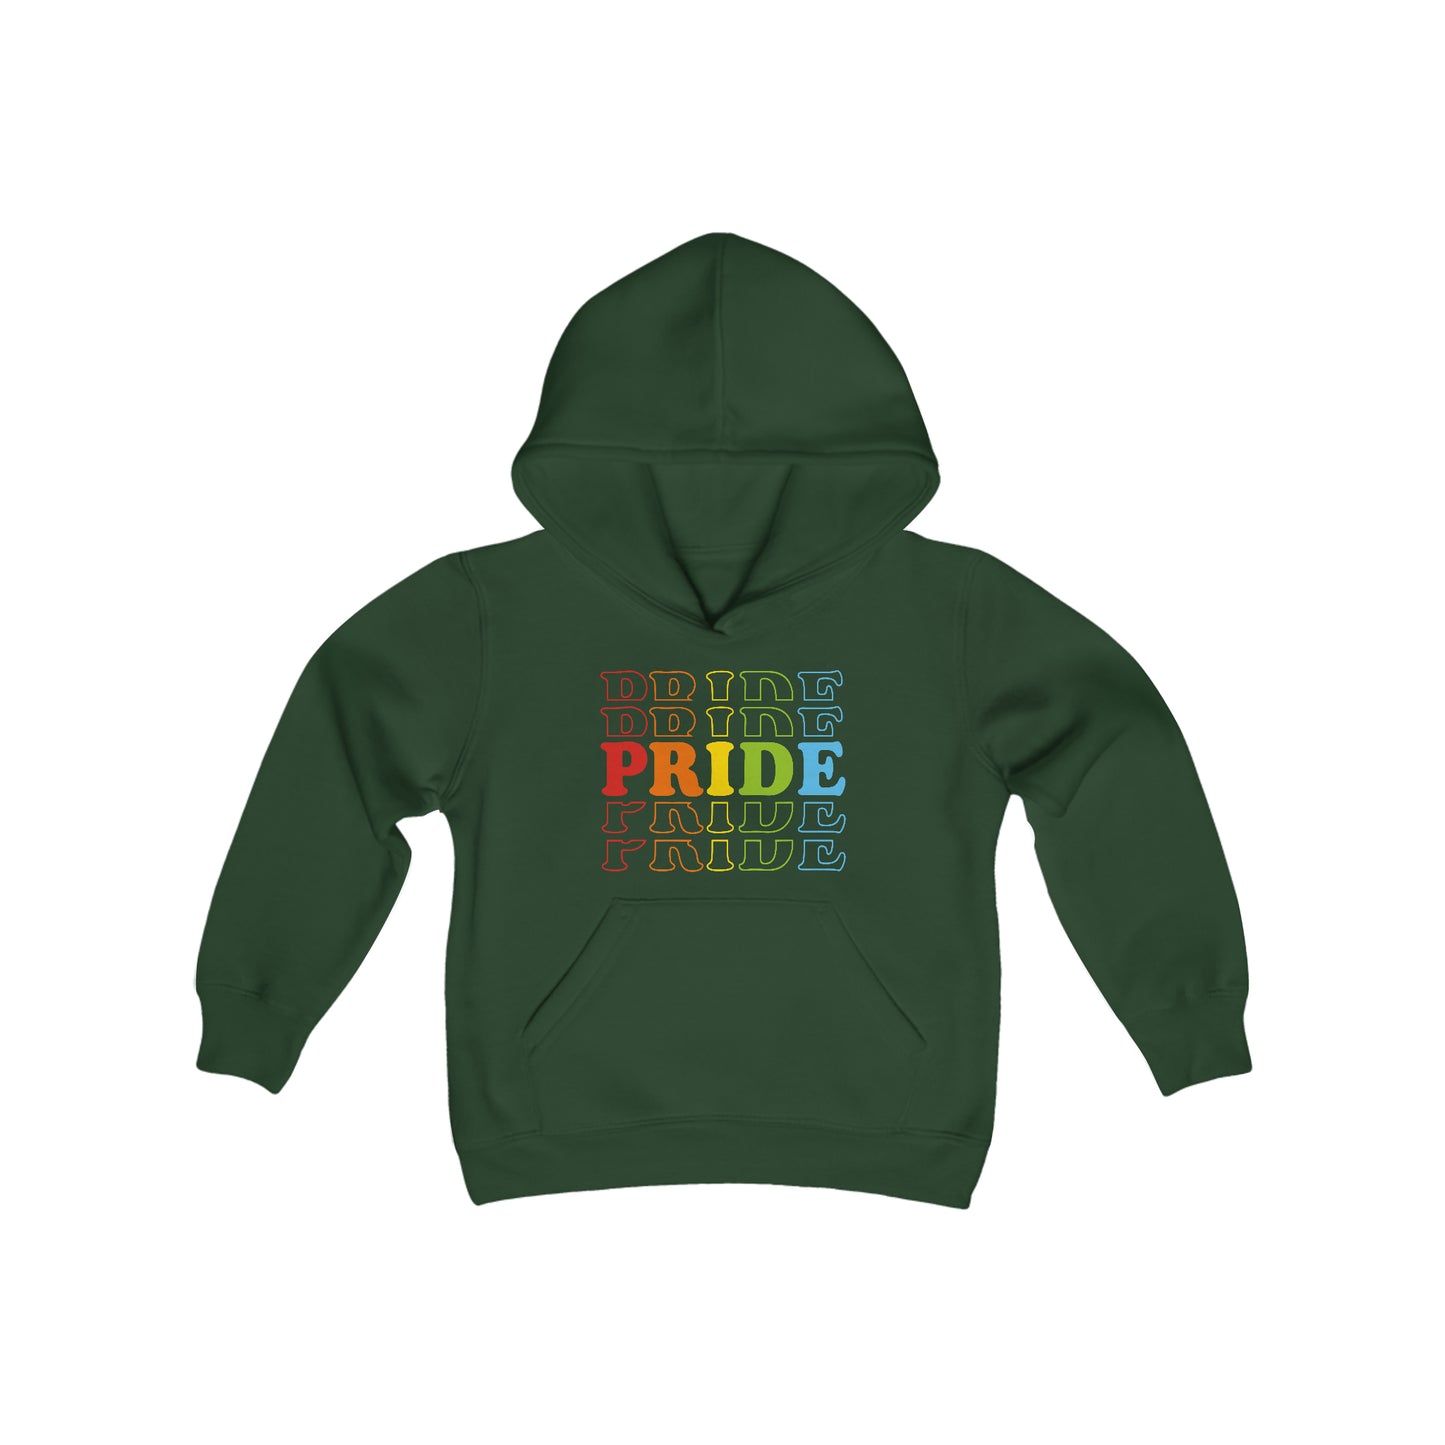 PRIDE - LGBTQ - Self Love - Self Acceptance - Love Equality - Youth Heavy Blend Hooded Sweatshirt